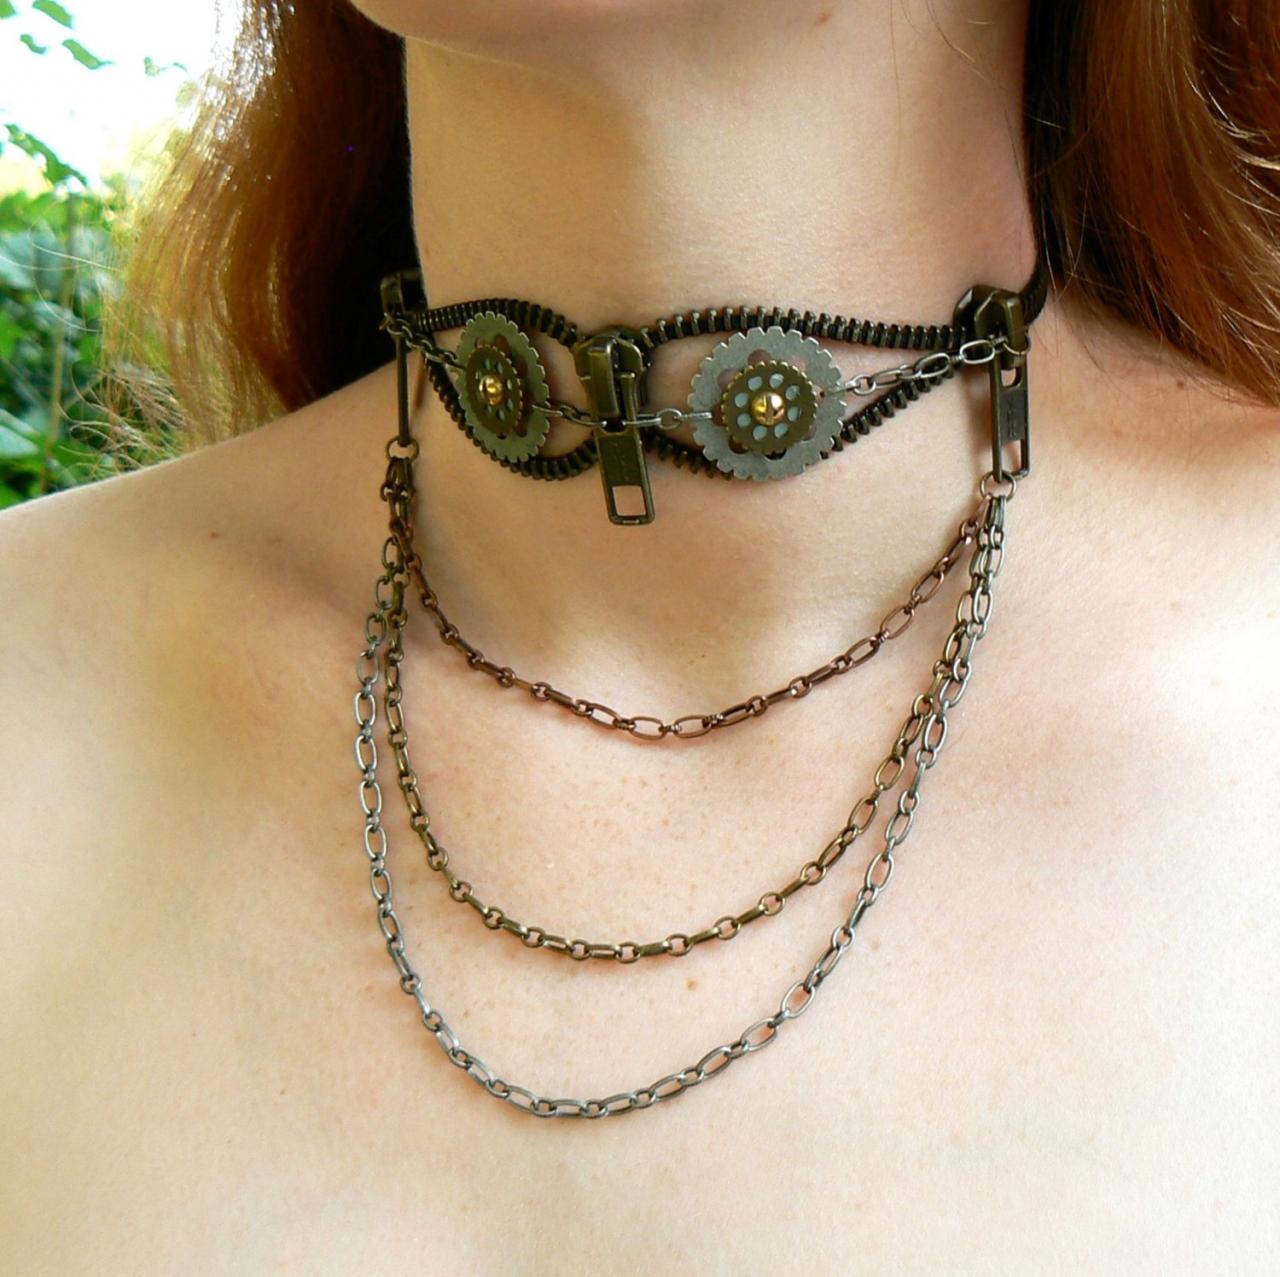 Steampunk Choker Necklace - Zipper Choker Necklace - Owl Choker Necklace